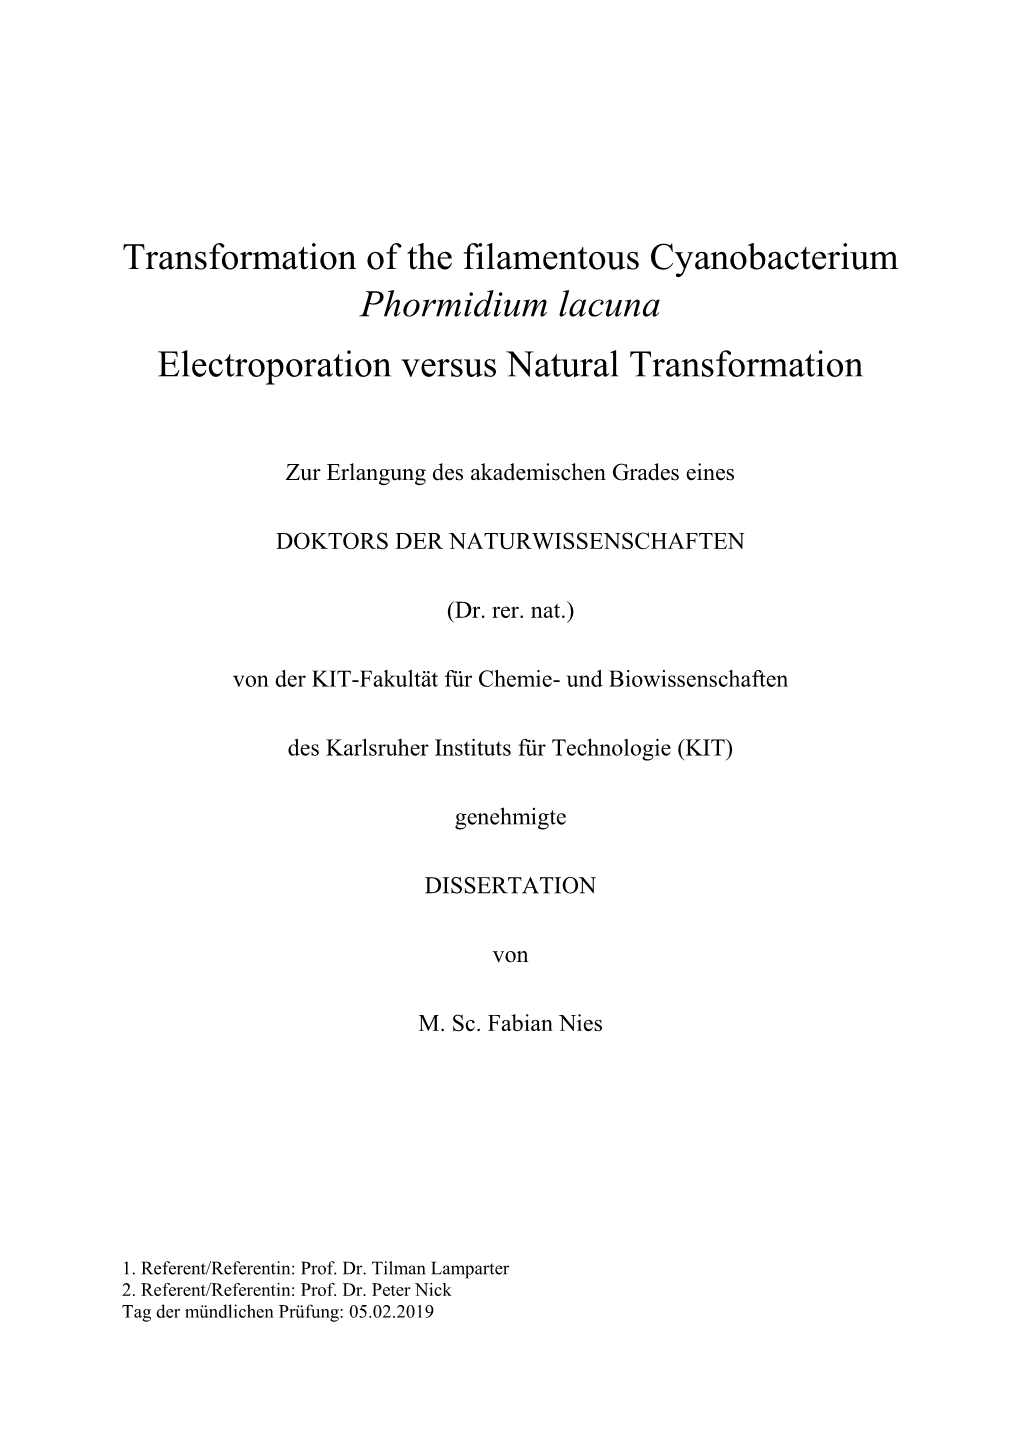 Electroporation Versus Natural Transformation